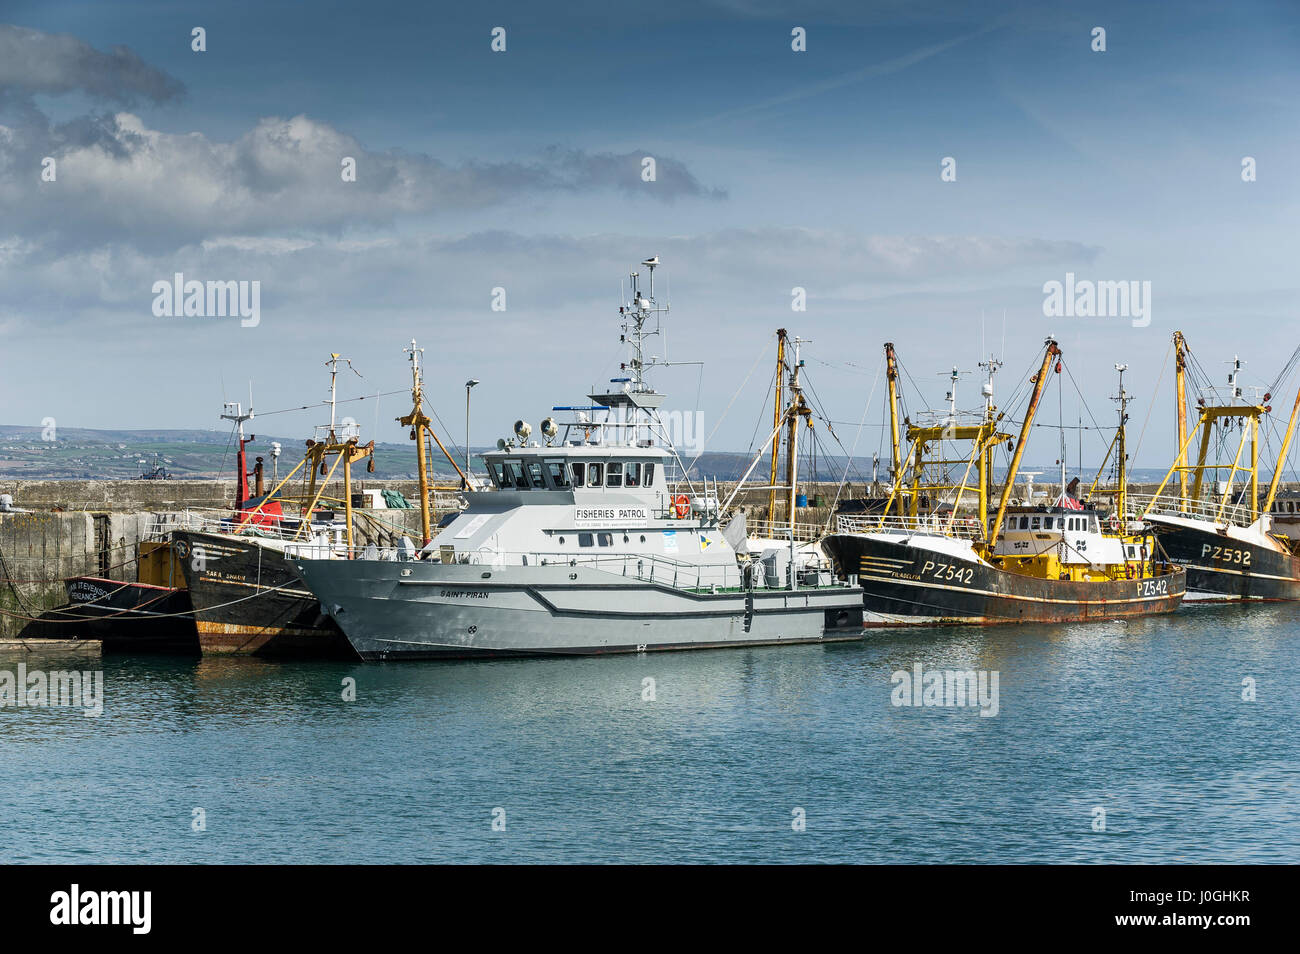 Newlyn Puerto Pesquero San Piran buque patrulla de pesca puerto puerto del barco de pesca barco de pesca barcos de pesca barcos de pesca Foto de stock